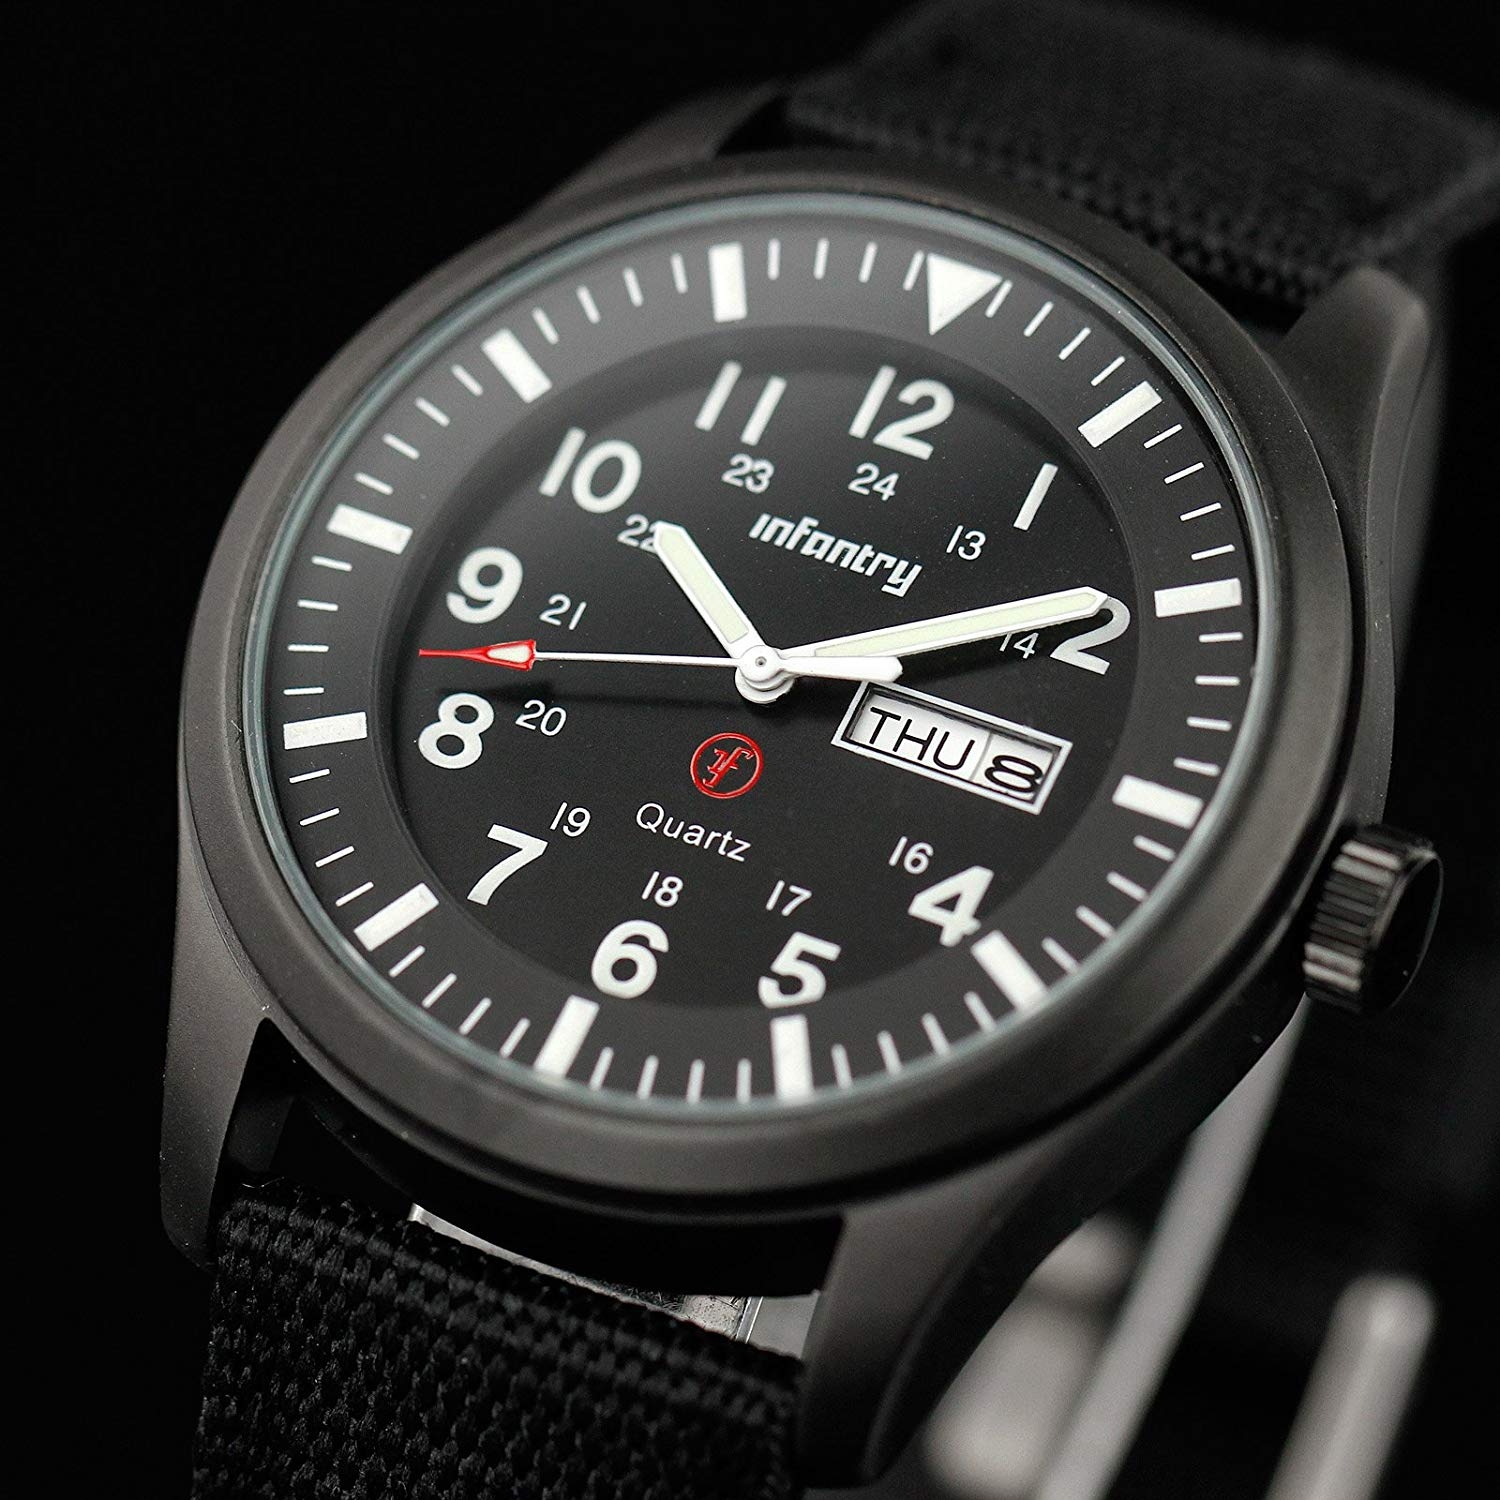 Купить часы секунда. Часы милитари Army Style Black. Часы инфантри мужские. Infantry 2010 года часы. Турецкая Военная часы.